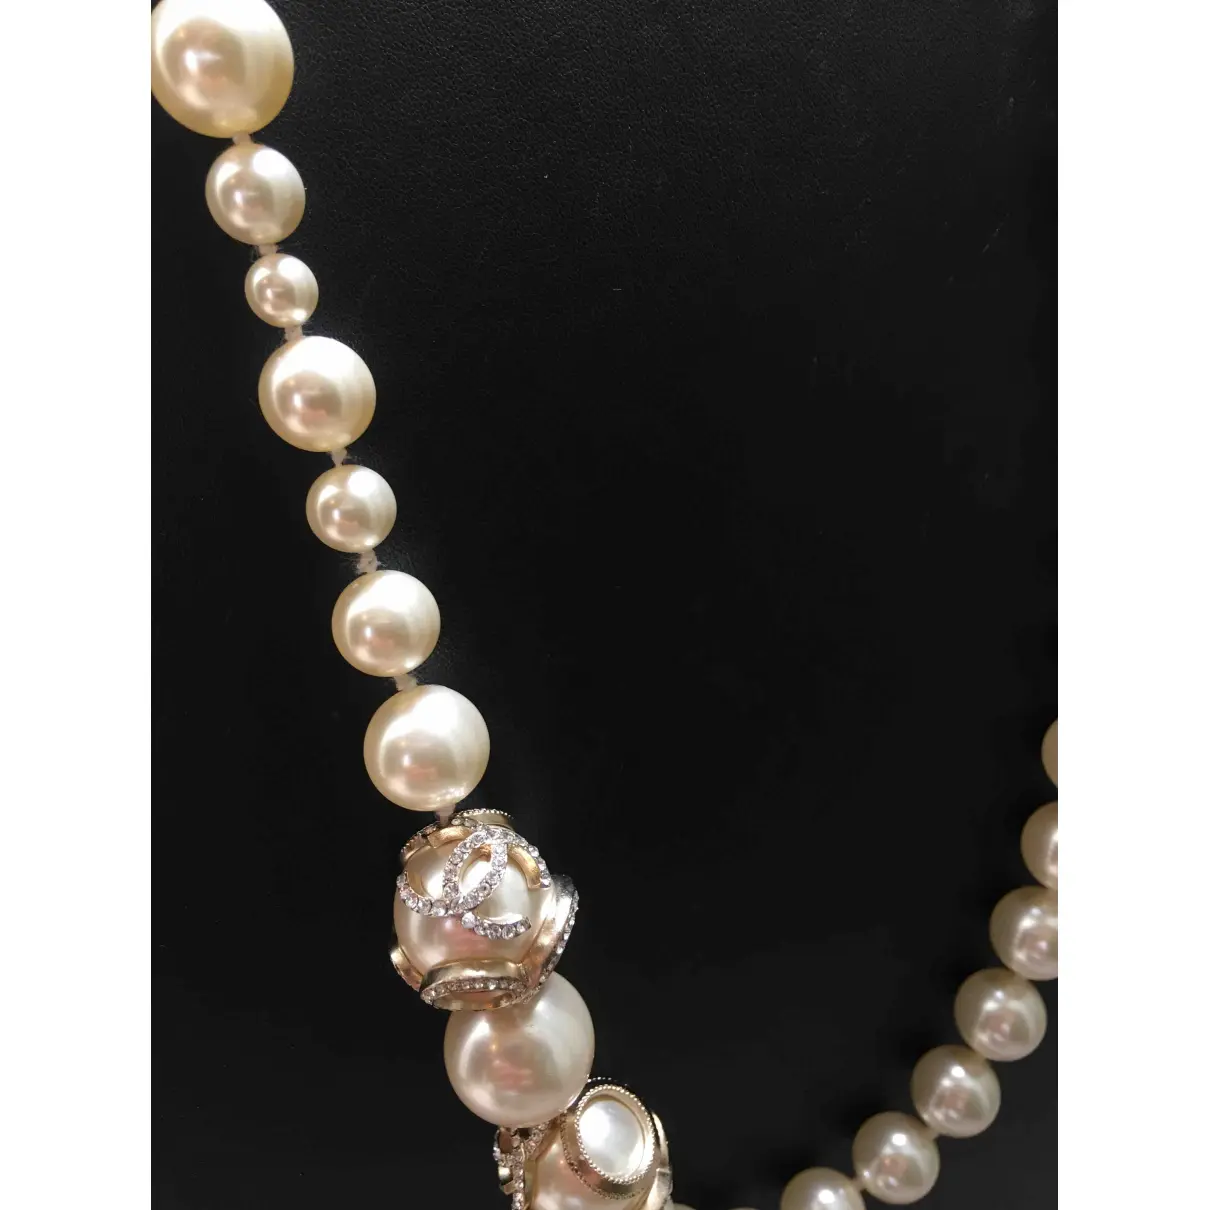 Buy Chanel Baroque pearls necklace online